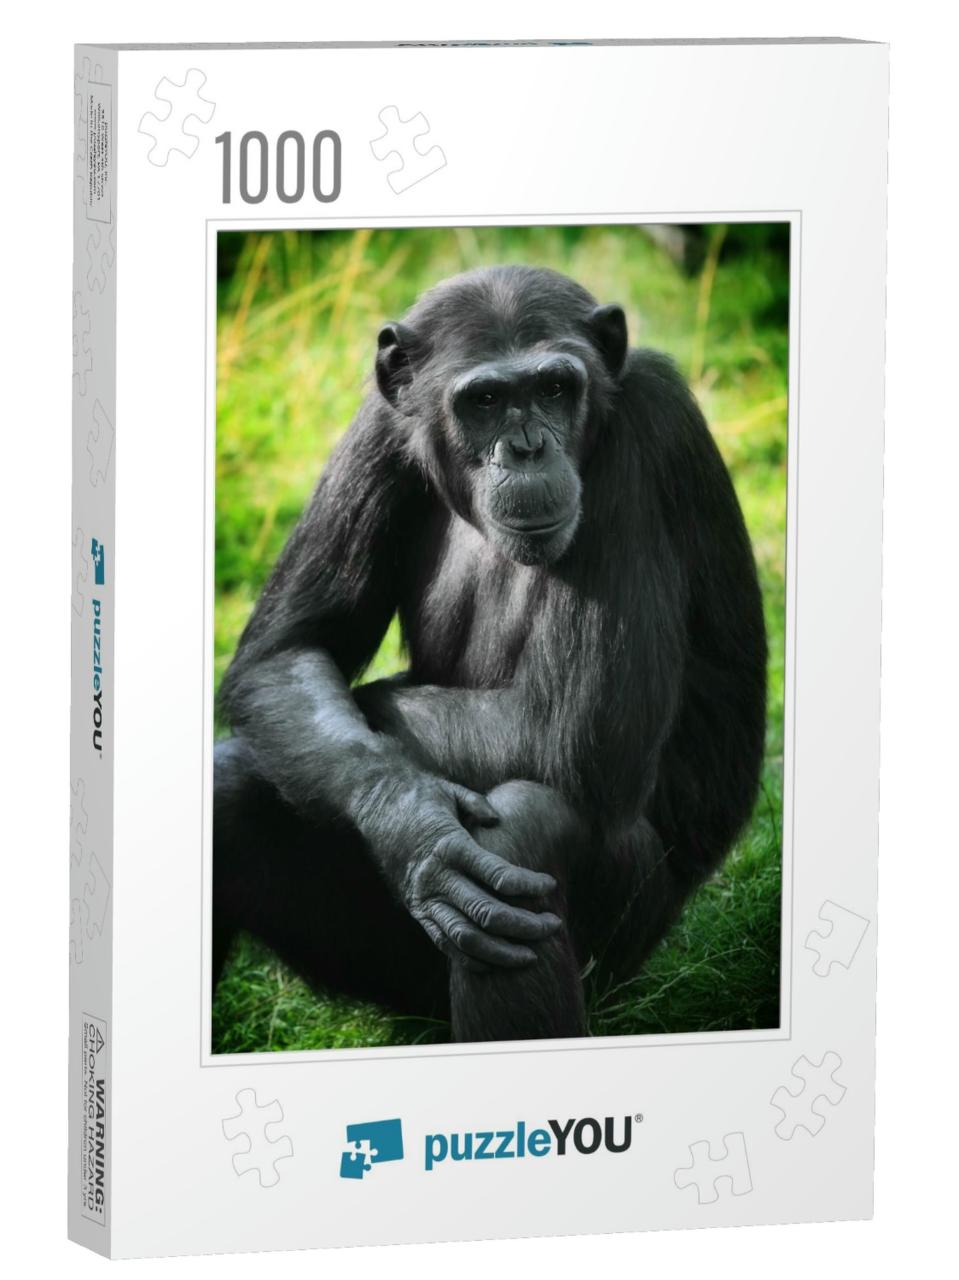 Animal Portrait - Chimpanzee Monkey Sitting & Posing... Jigsaw Puzzle with 1000 pieces